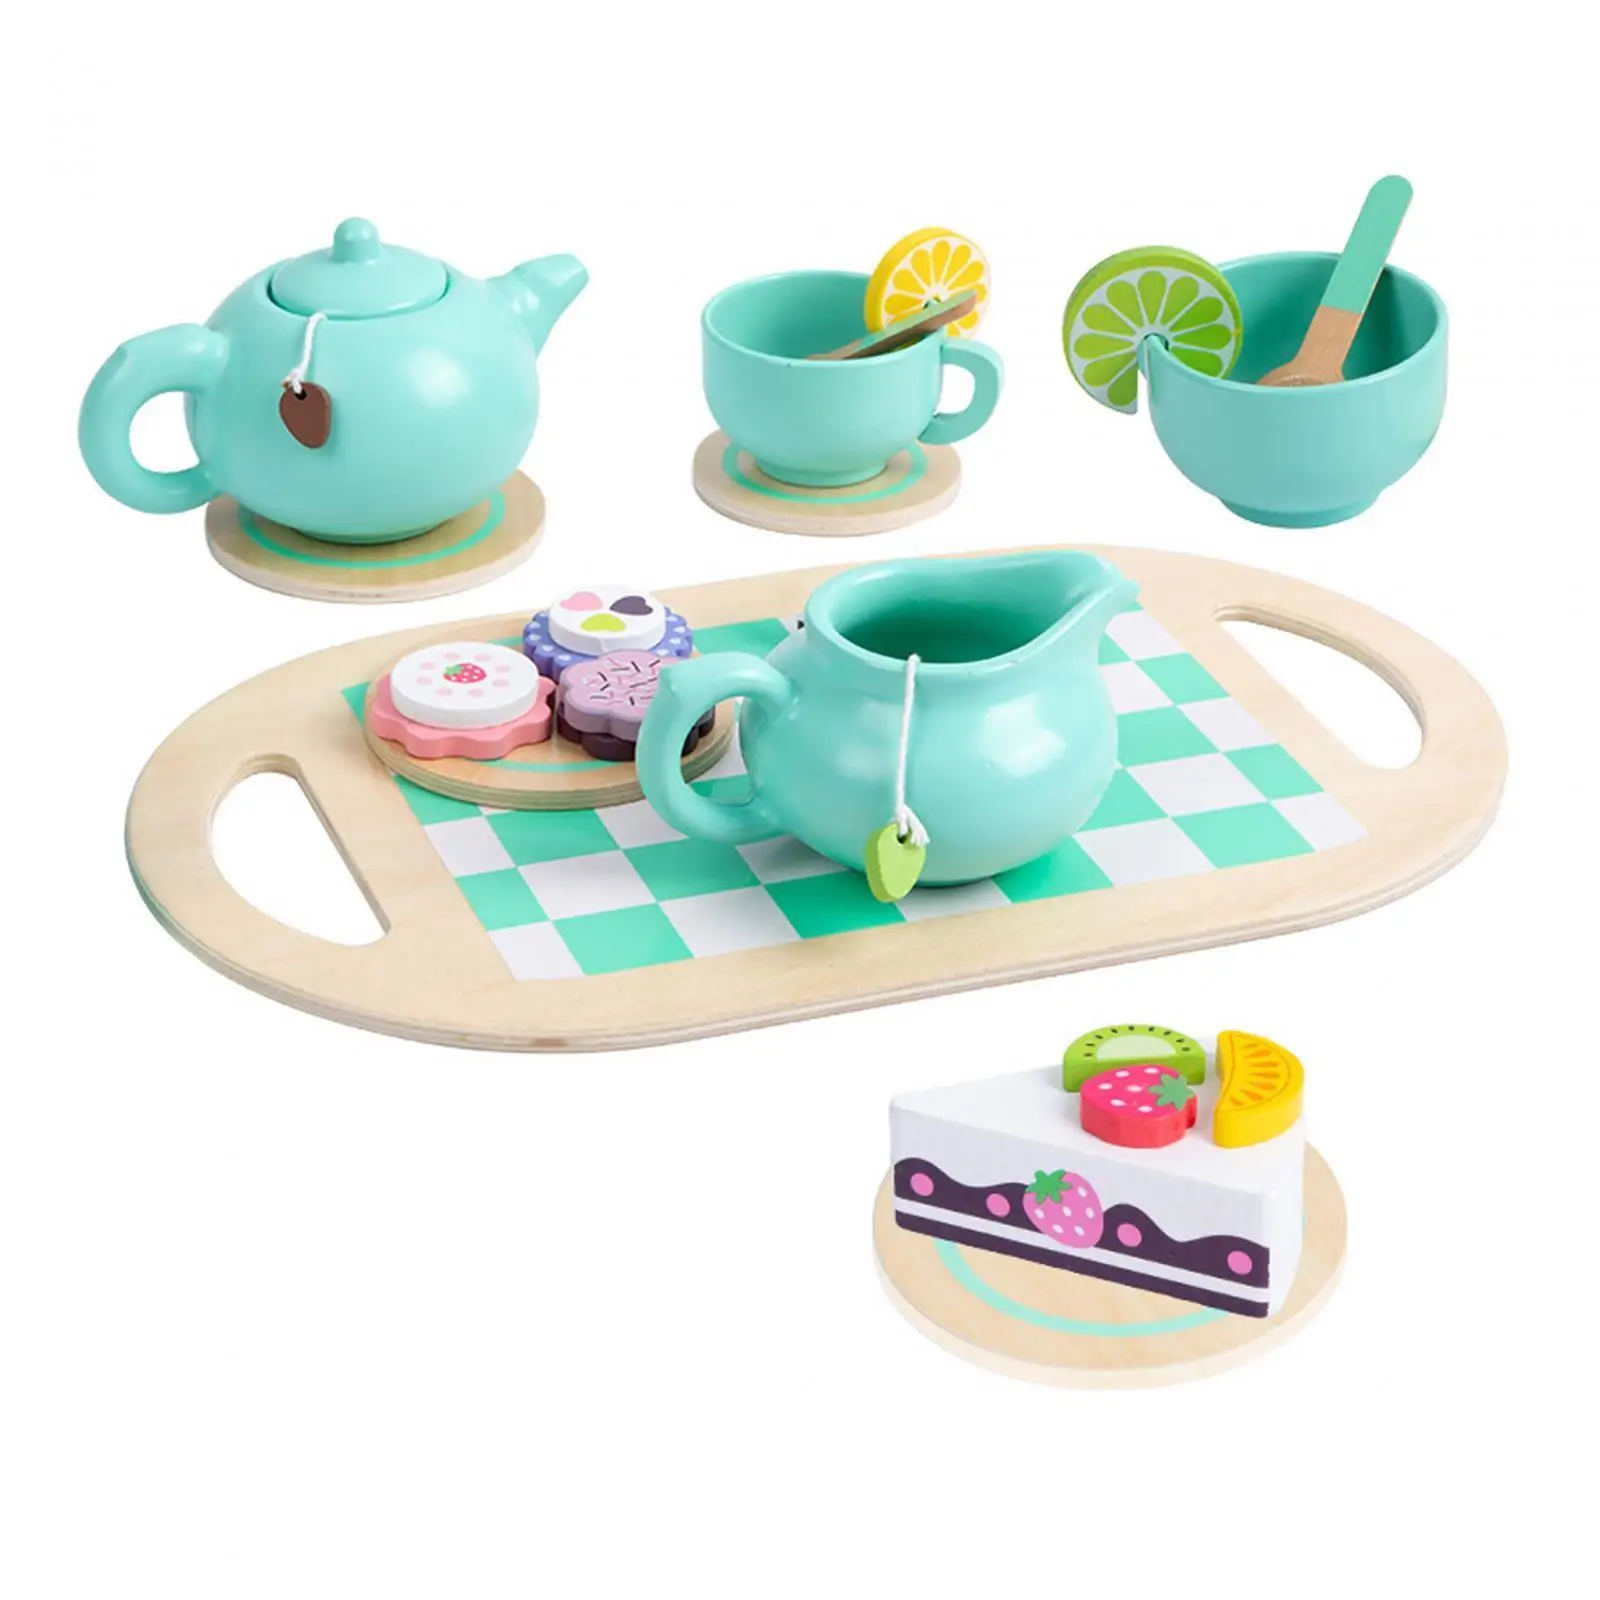 Wooden Tea Party Set Developmental Toy Montessori Toy for Kids Birthday Gift